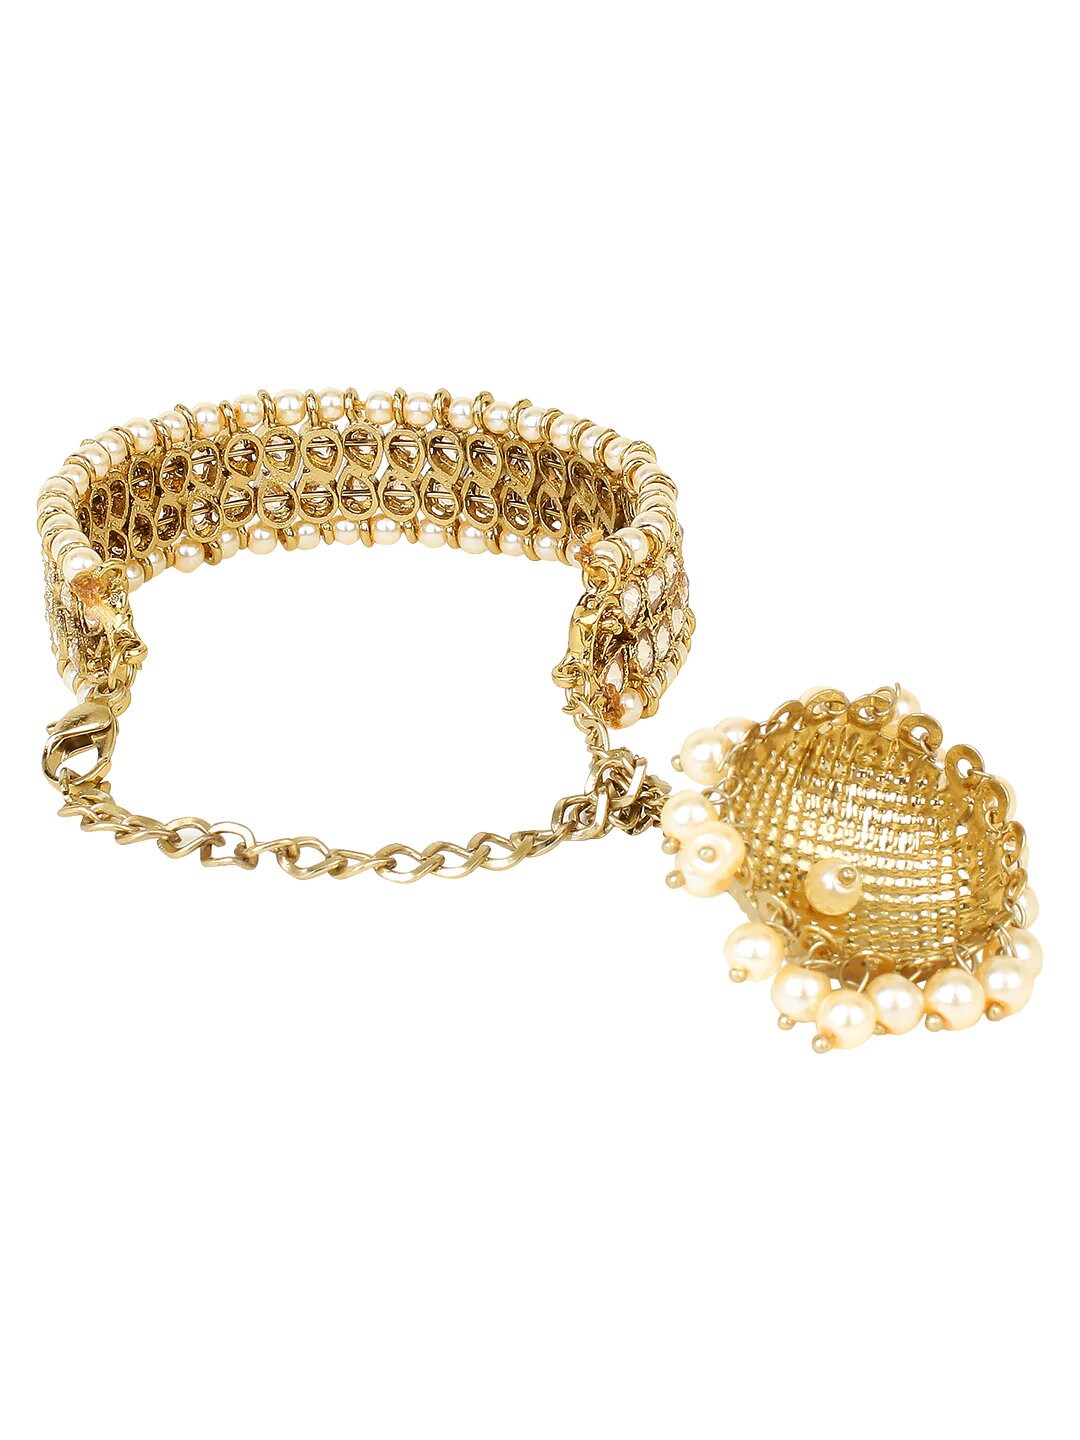 Jhumki Mirror Bracelet / Indian Bangles / Punjabi Jewelry / Pakistani jewelry / Indian jewels